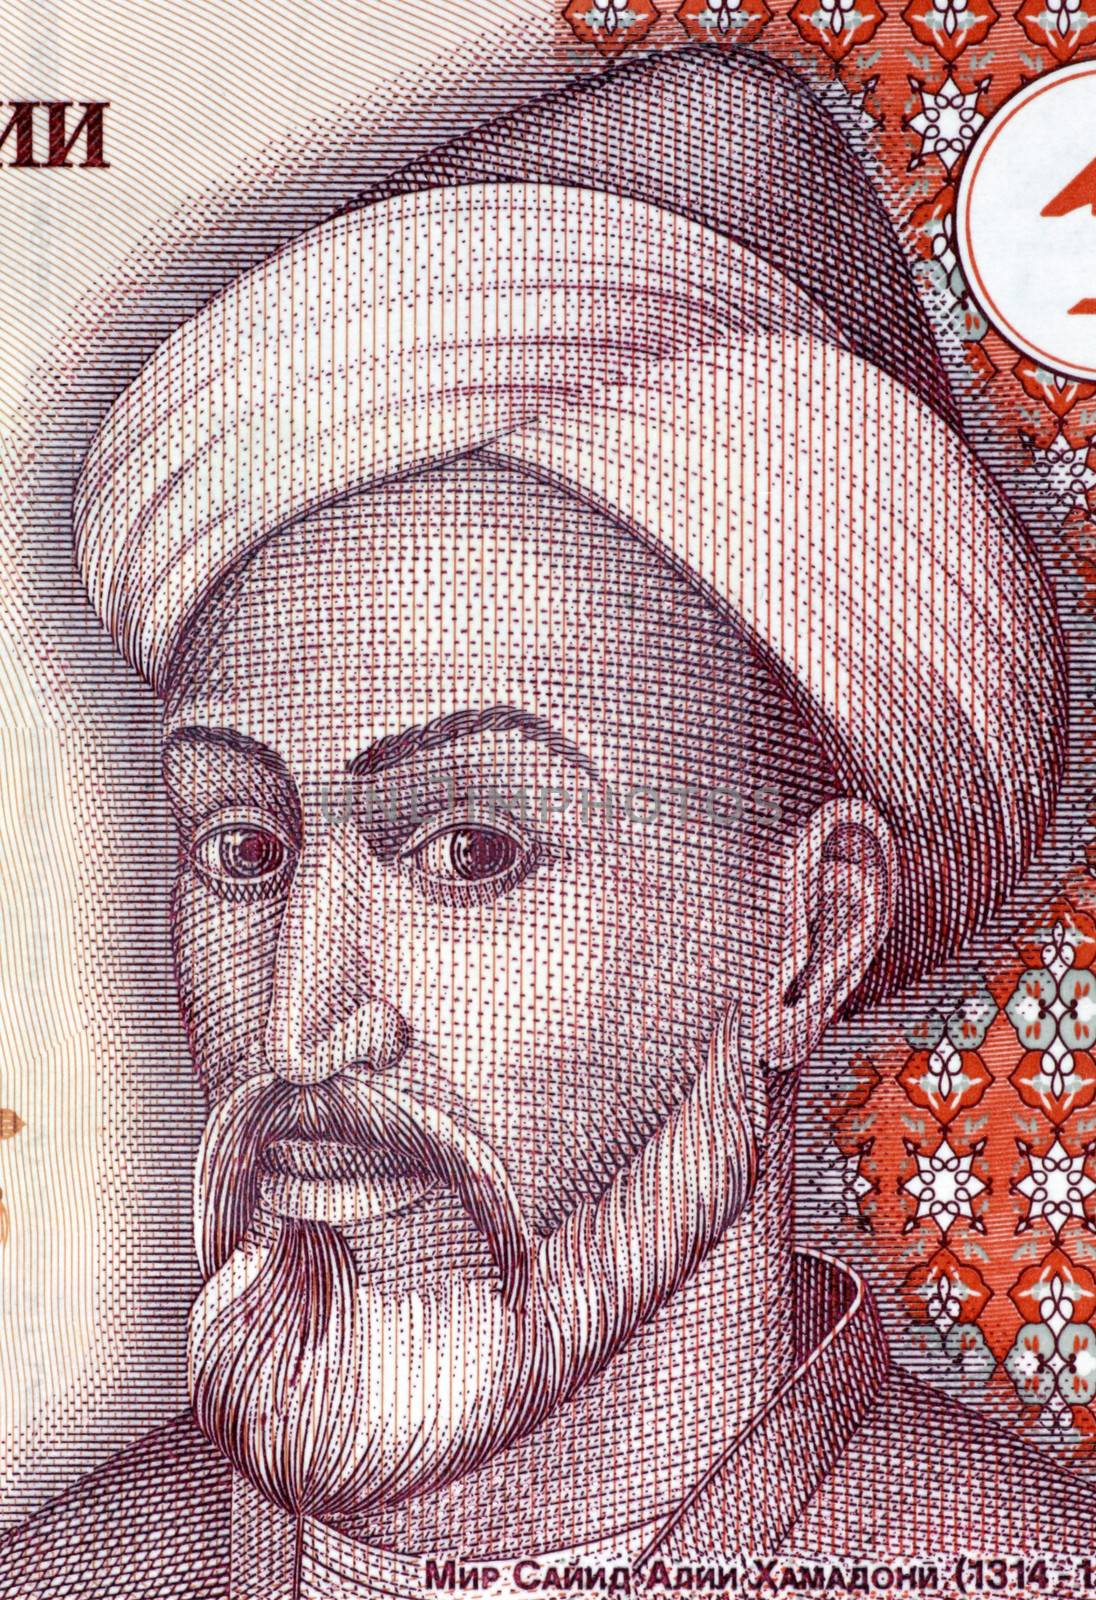 Mir Sayyid Ali Hamadani (1314-1384) on 10 Somoni 1999 Banknote from Tajikistan. Muslim scholar.